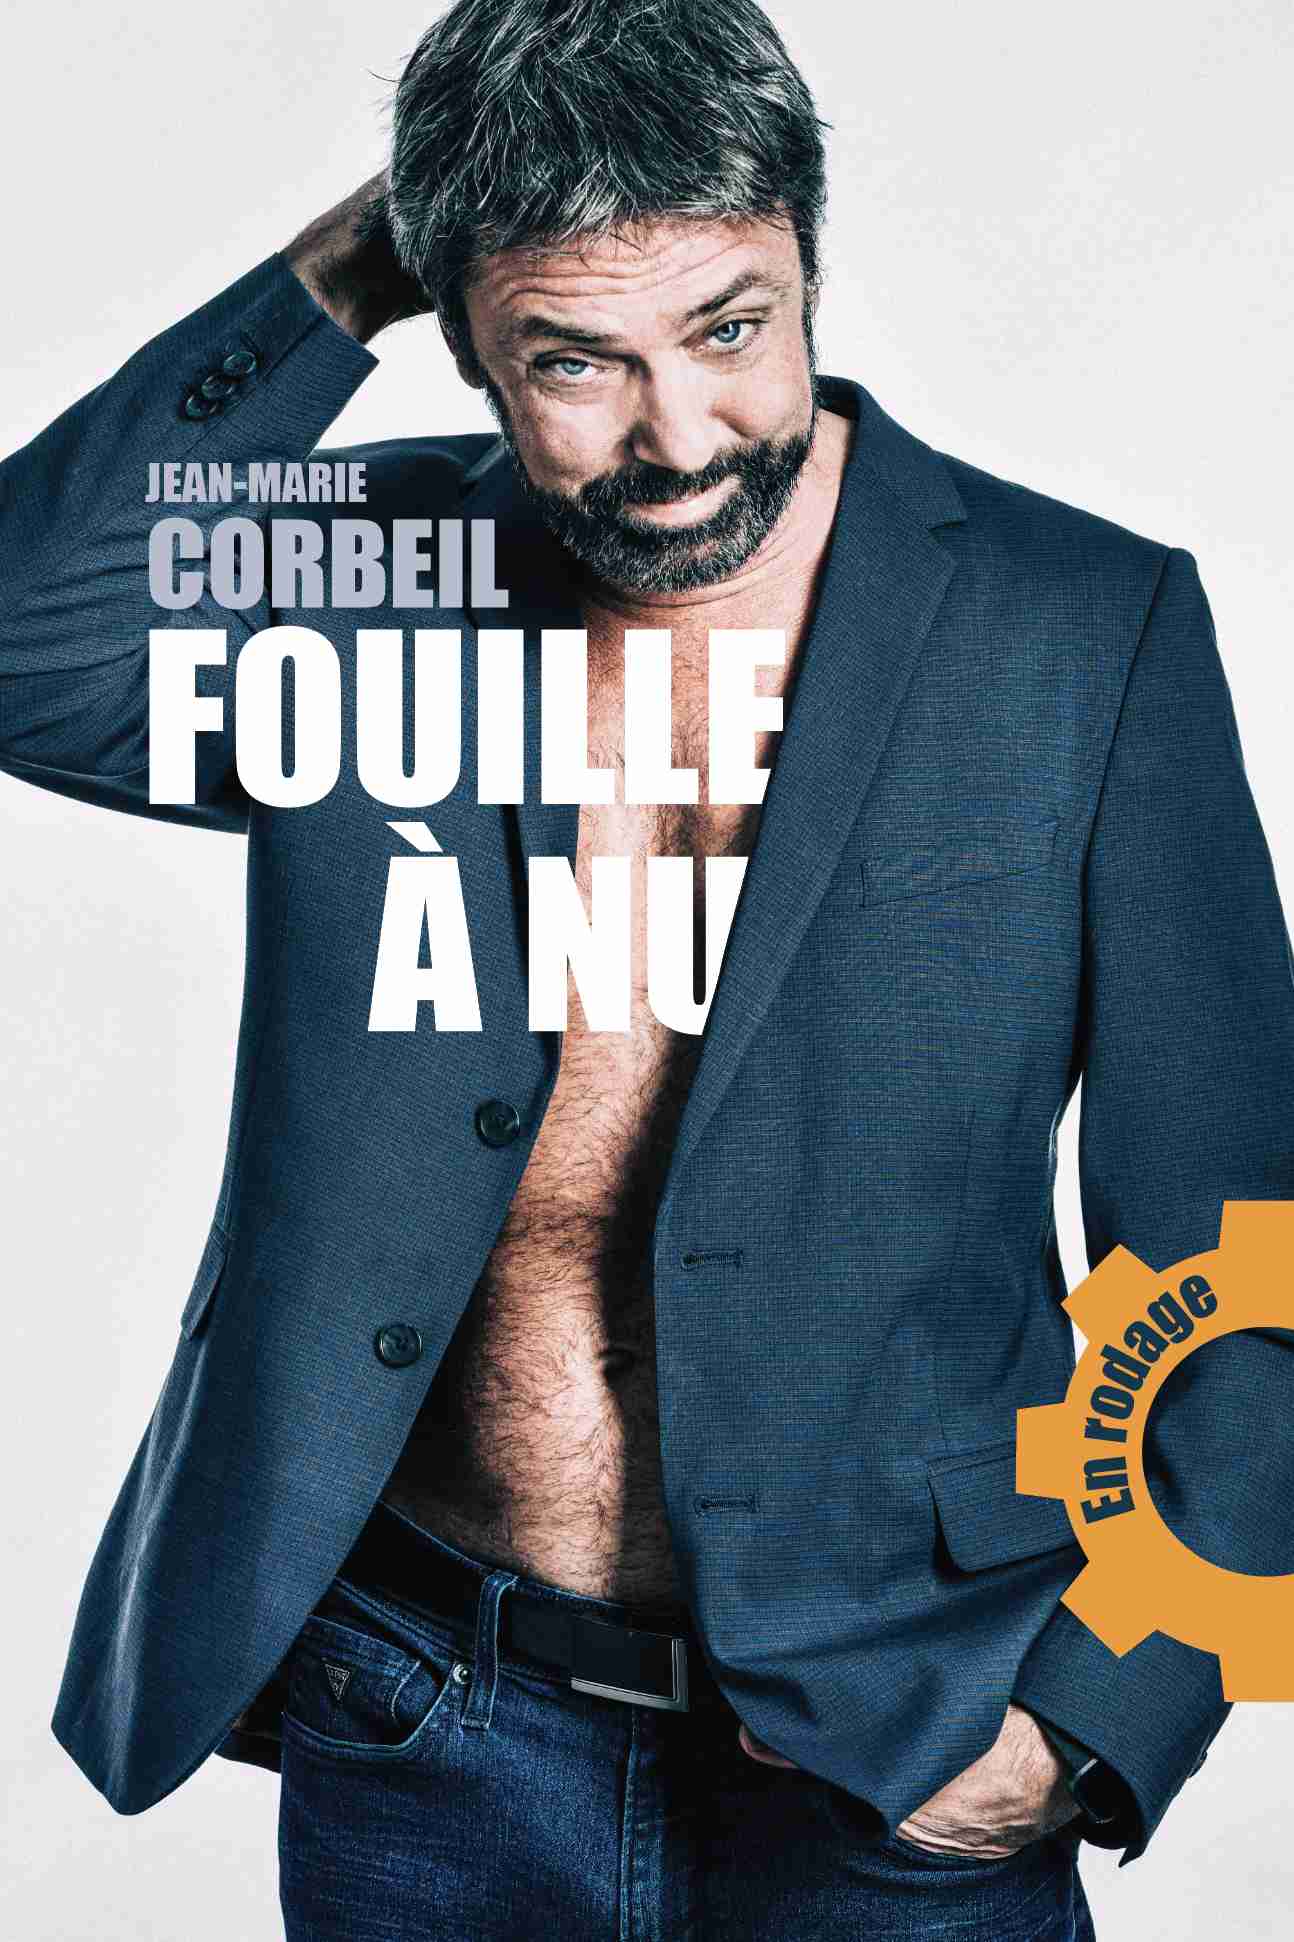 Jean-Marie Corbeil Fouille à nu